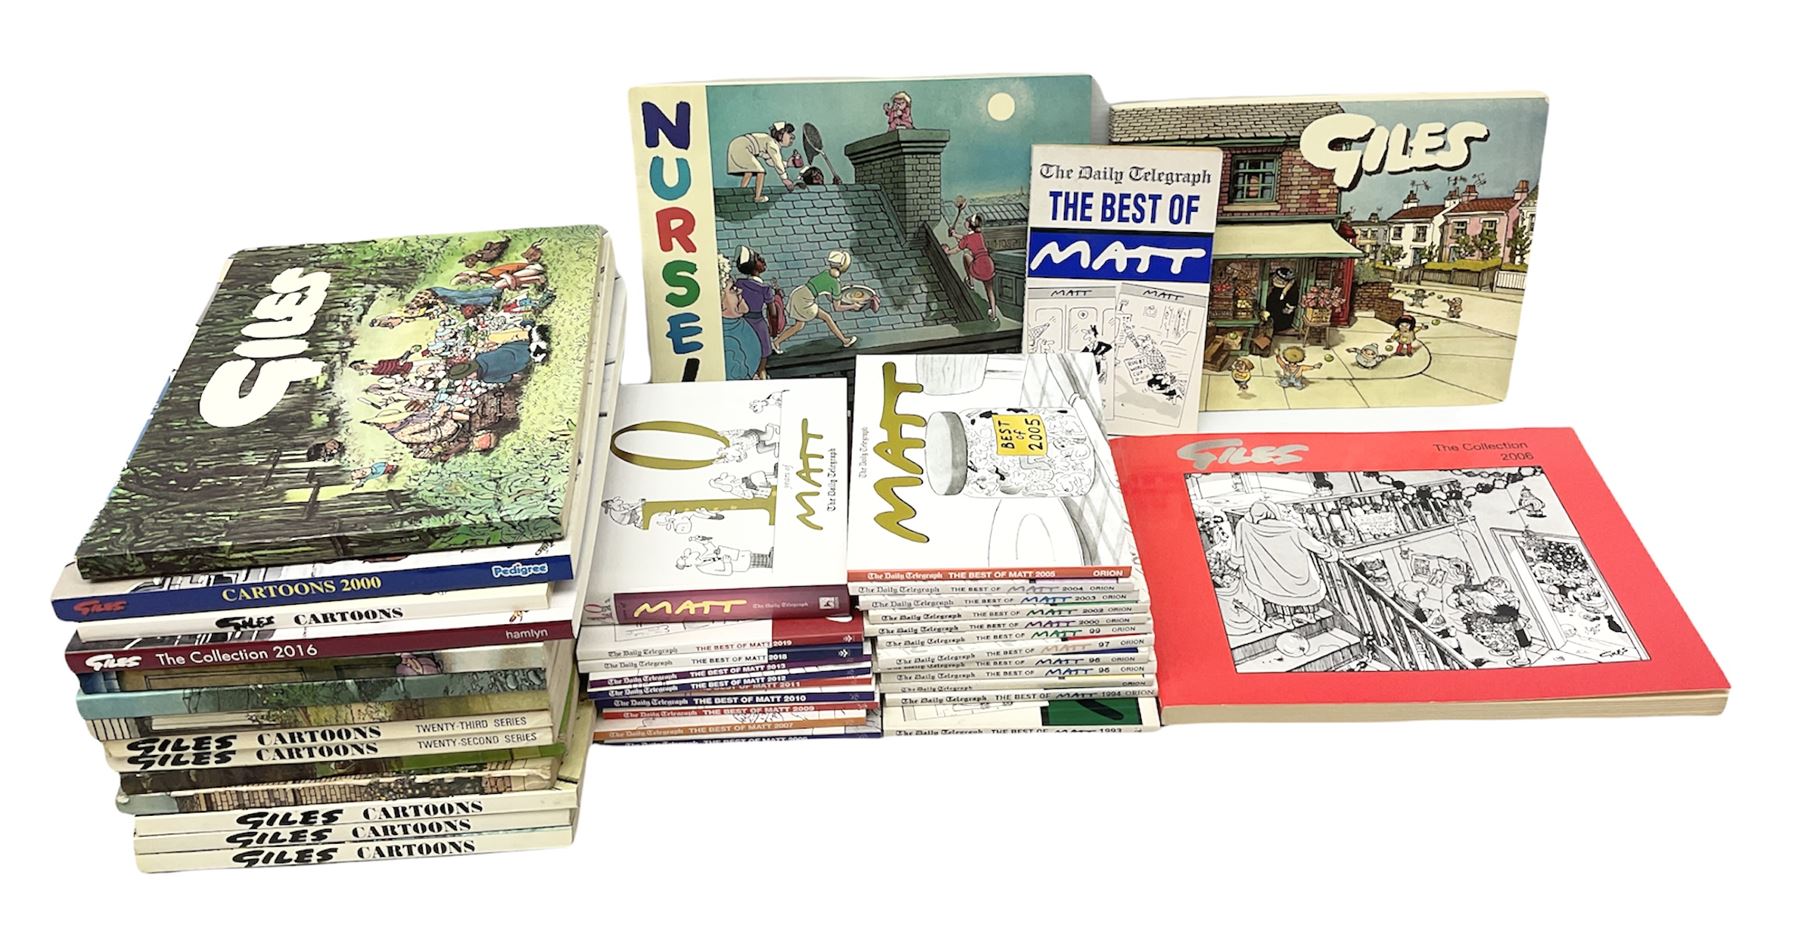 Seventeen Giles cartoon books of various series